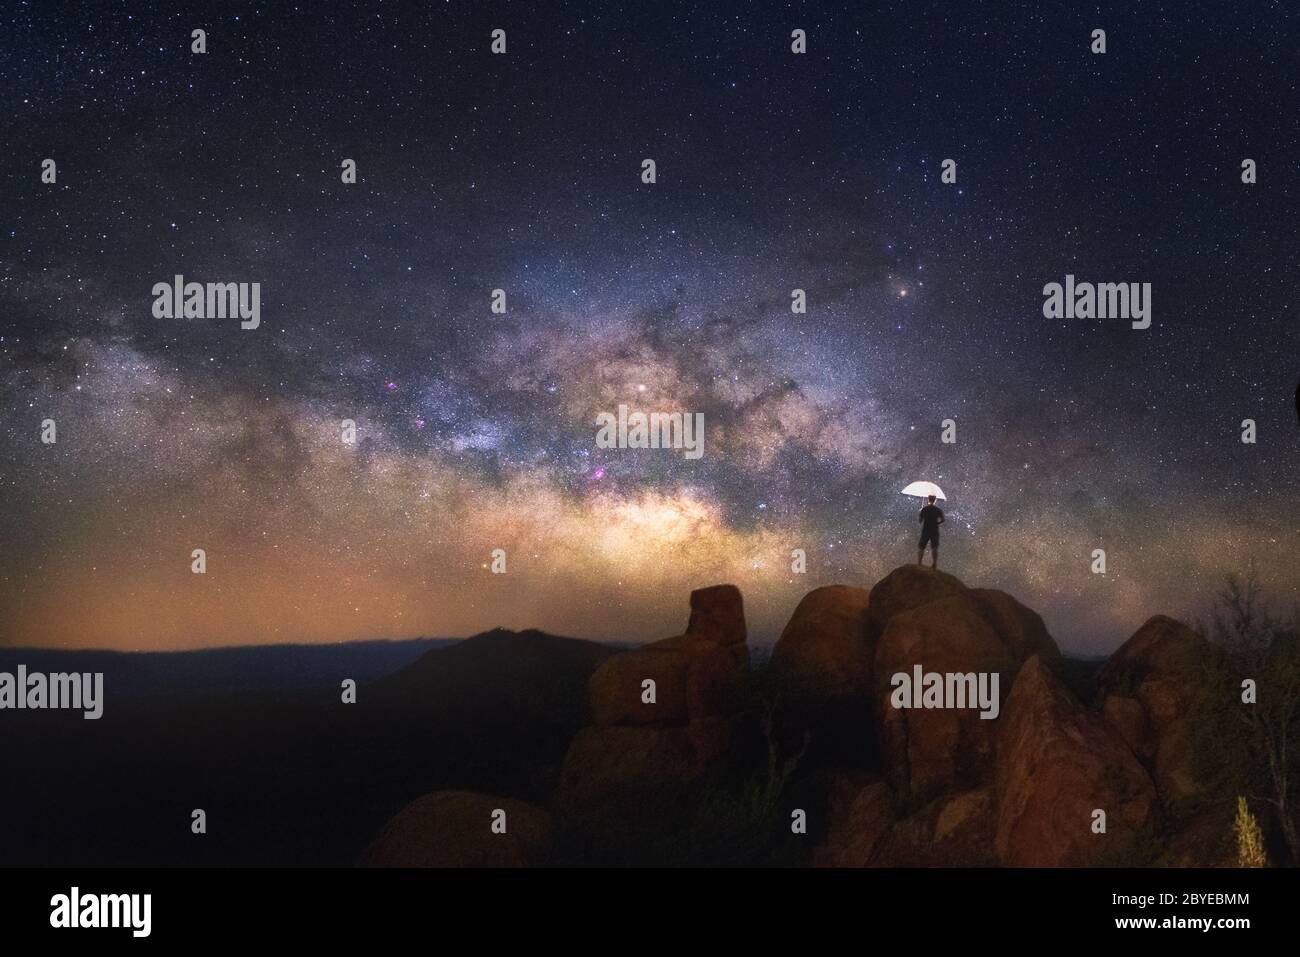 Milchstraße am Balanced Rock, Big Bend Nationalpark, Texas USA. Sternbild und Galaxie Stockfoto